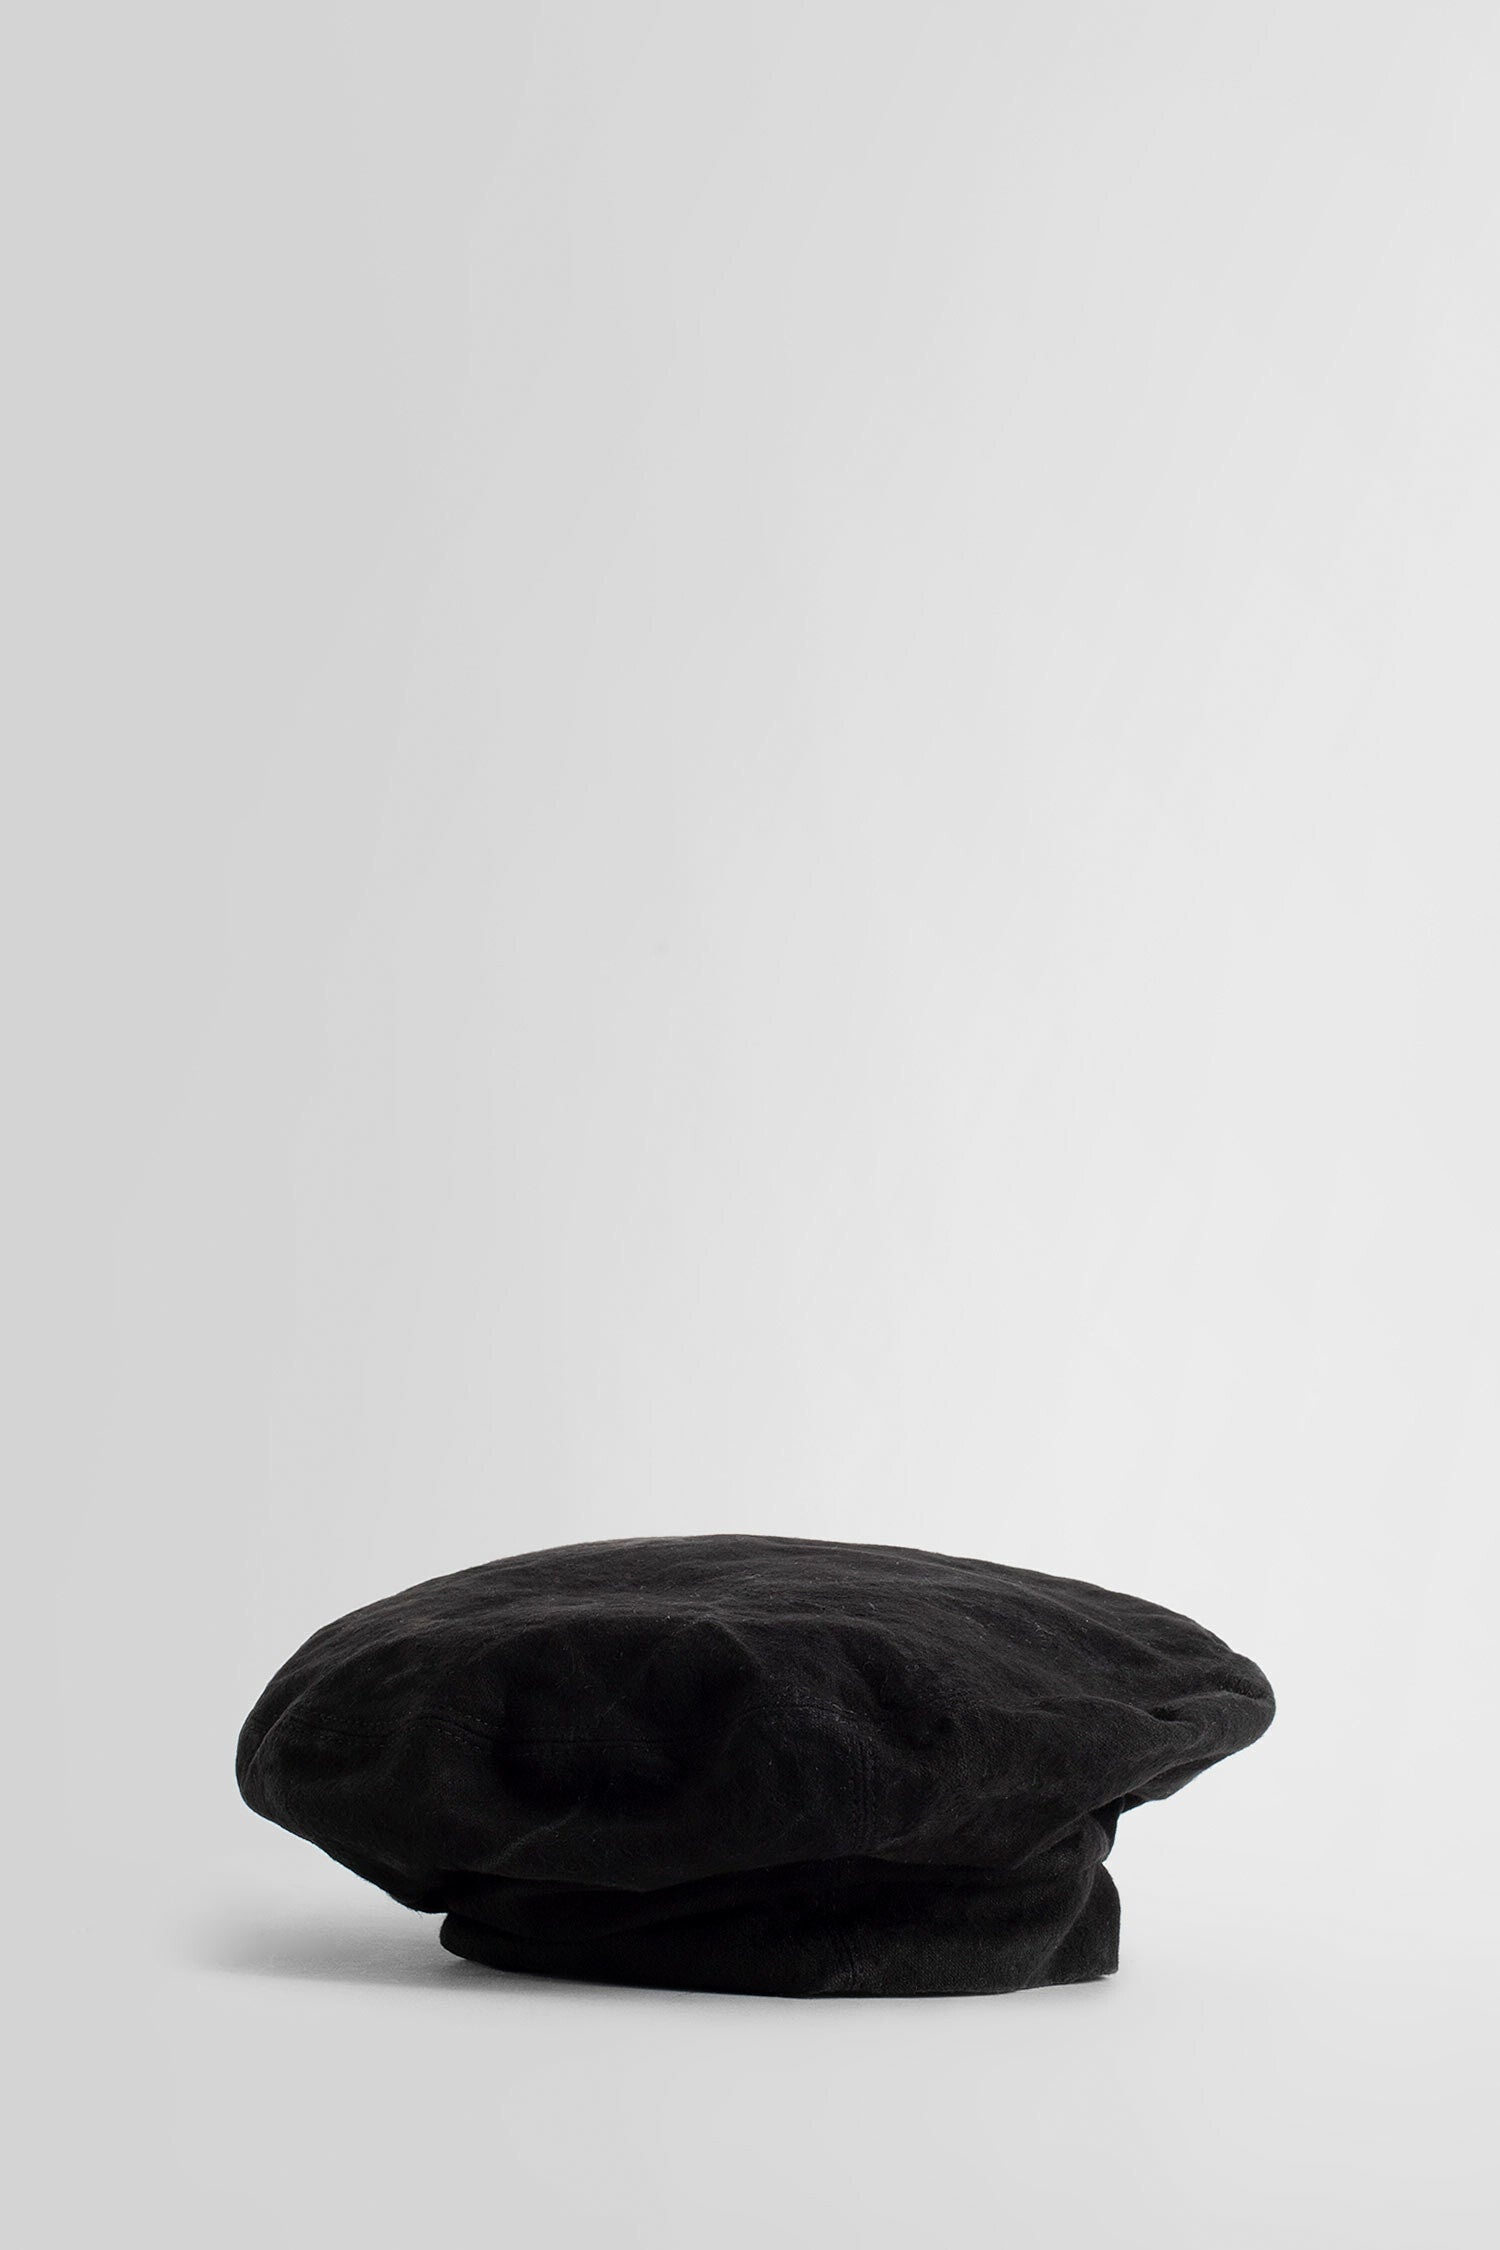 HORISAKI UNISEX BLACK HATS - 3